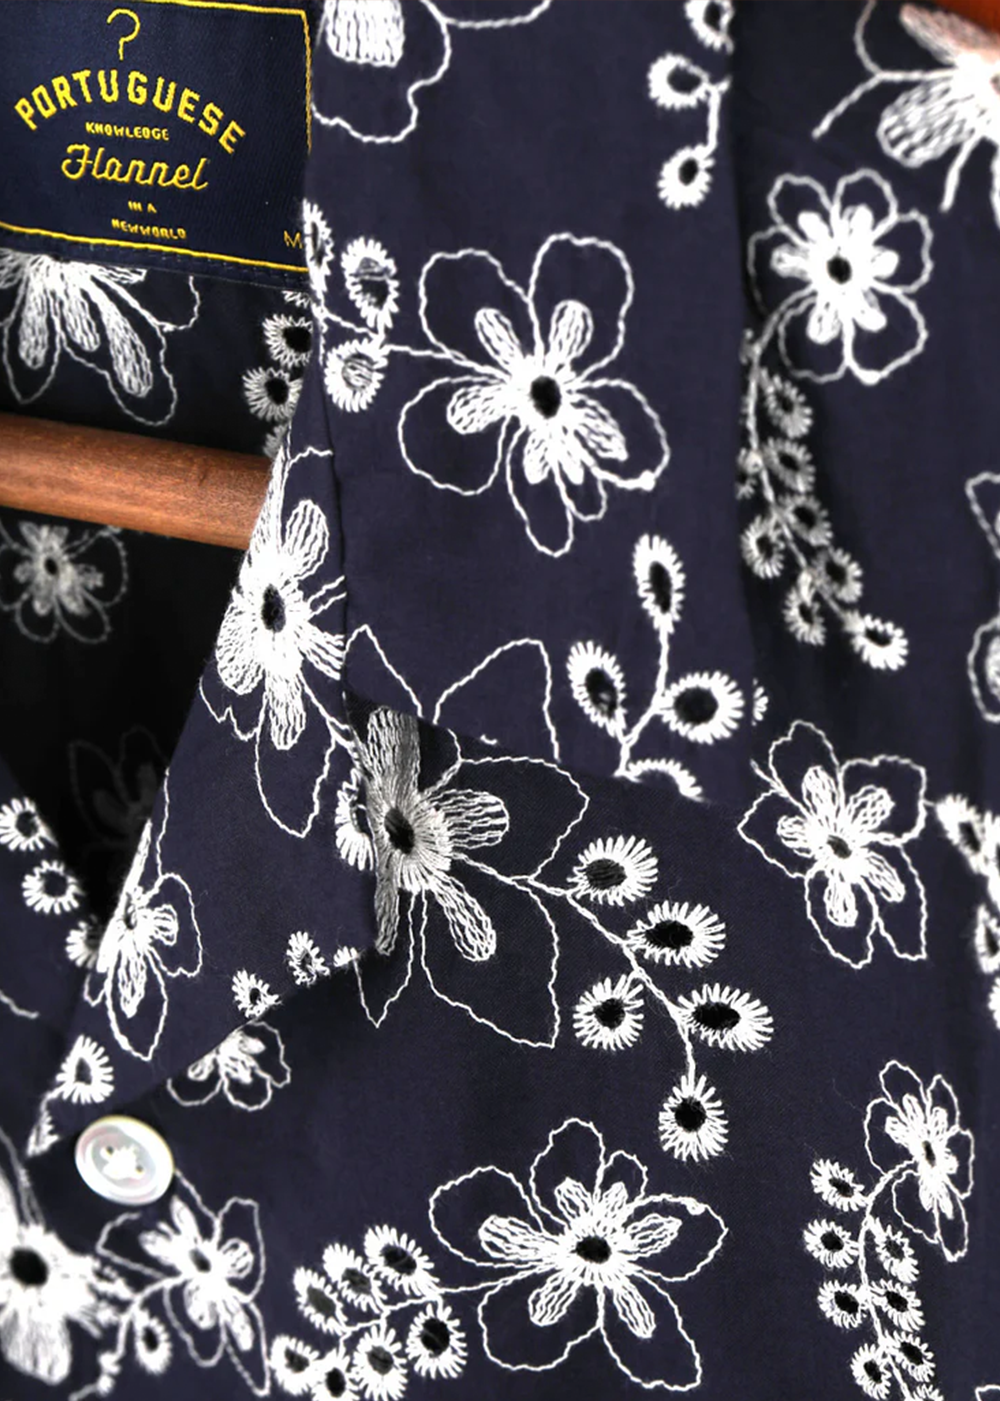 Folclore 4 Shirt - Portuguese Flannel Canada - Danali